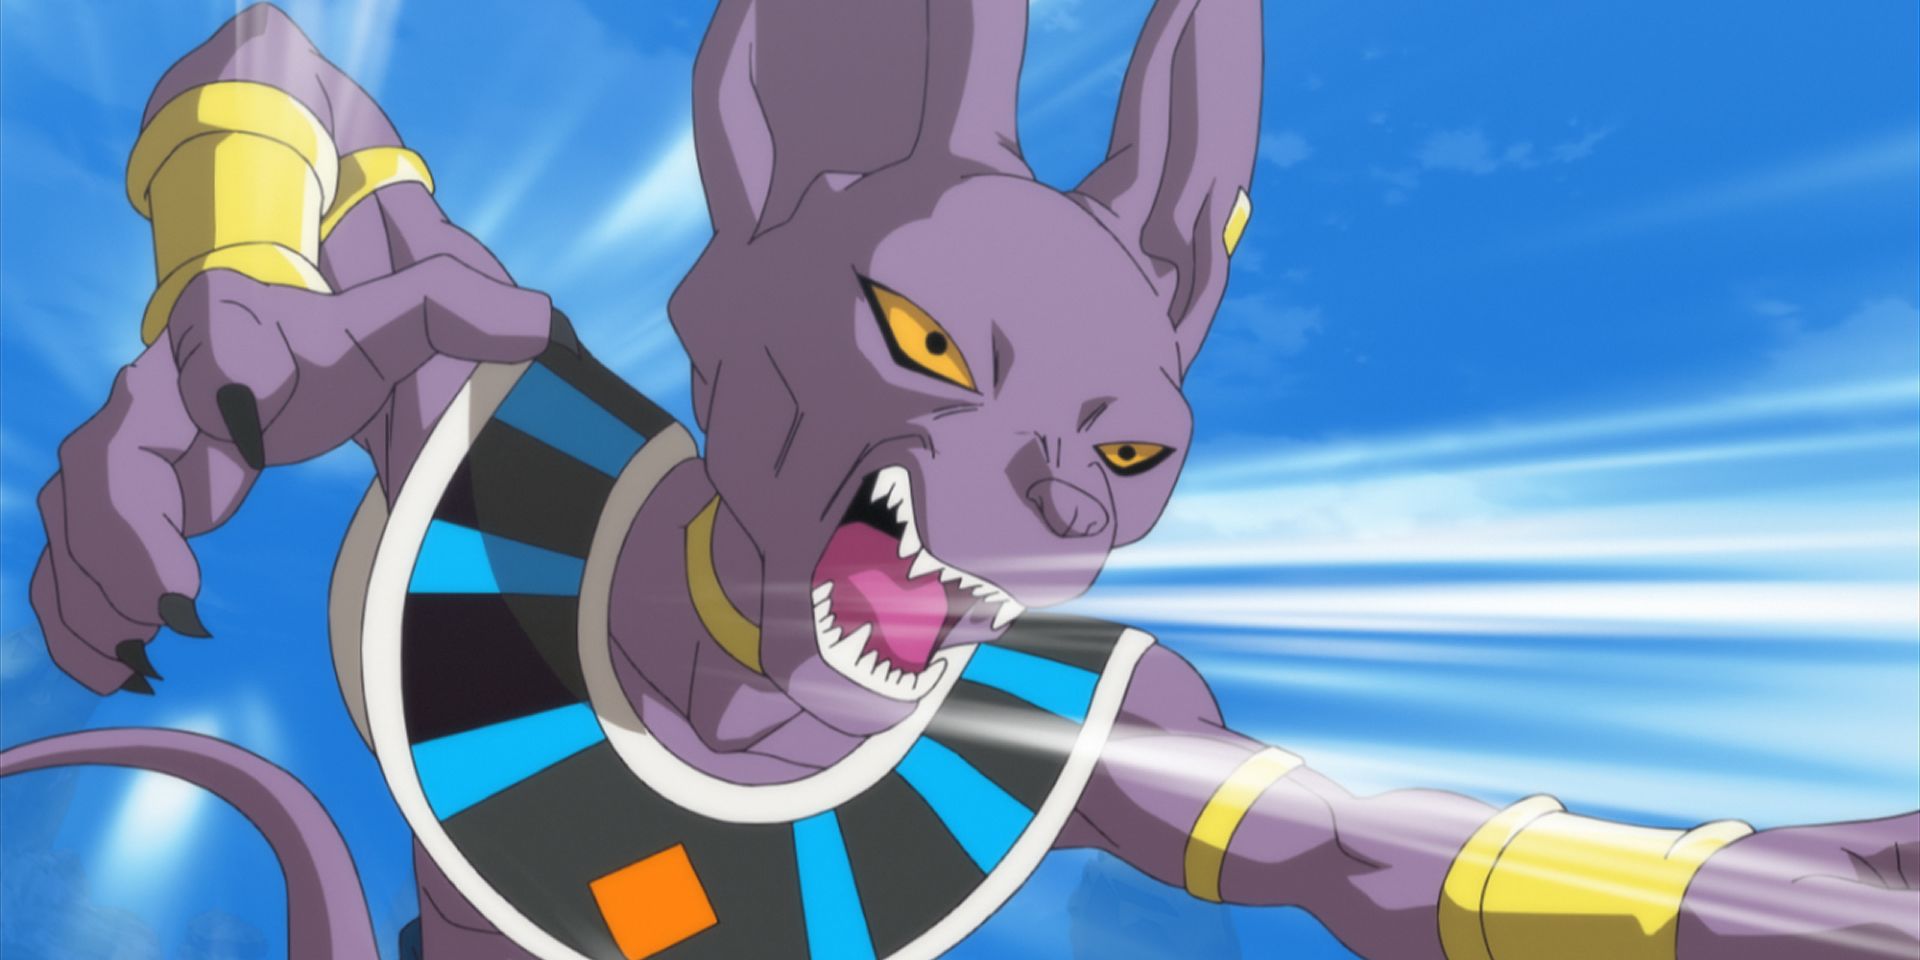 Beerus ferociously striking Goku in Dragon Ball Super